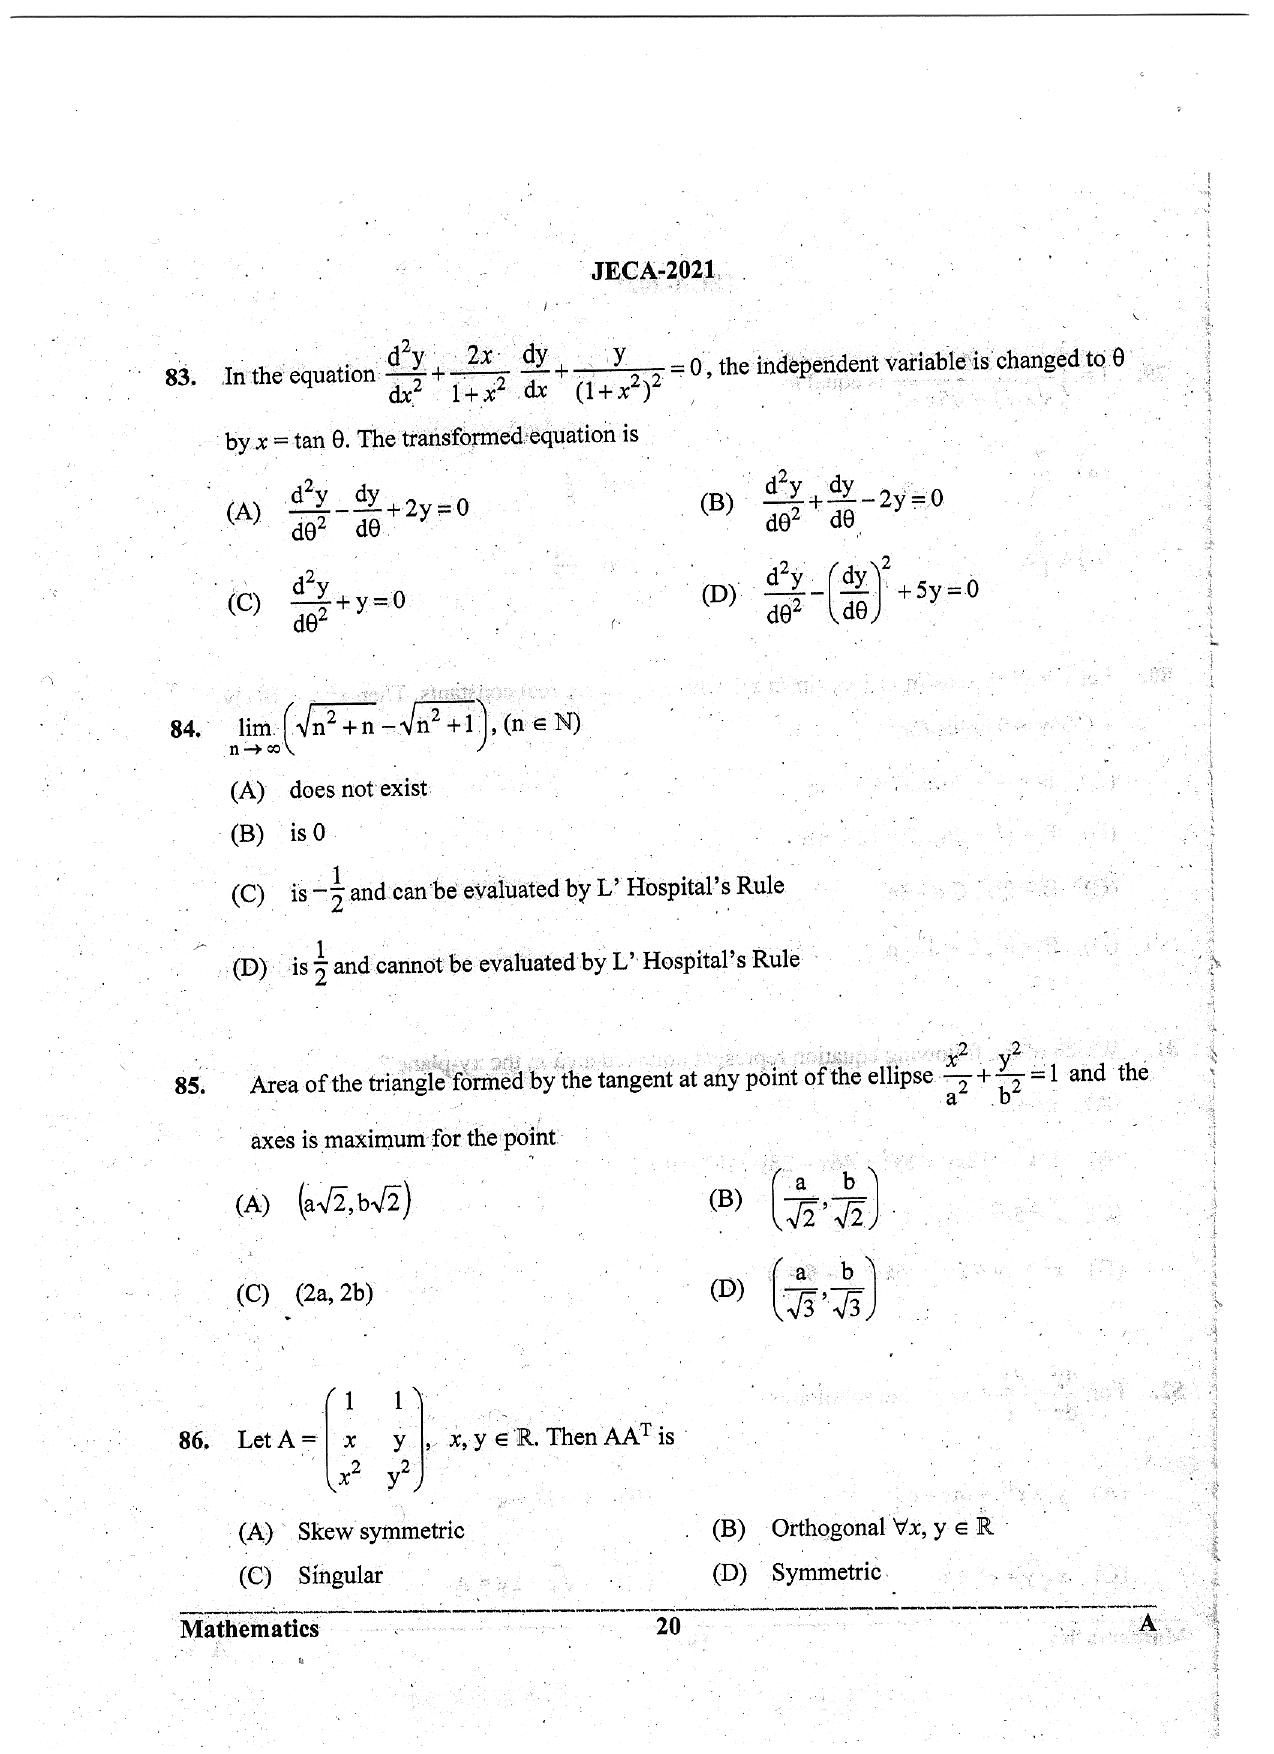 WB JECA 2021 Mathematics Question Paper - Page 20